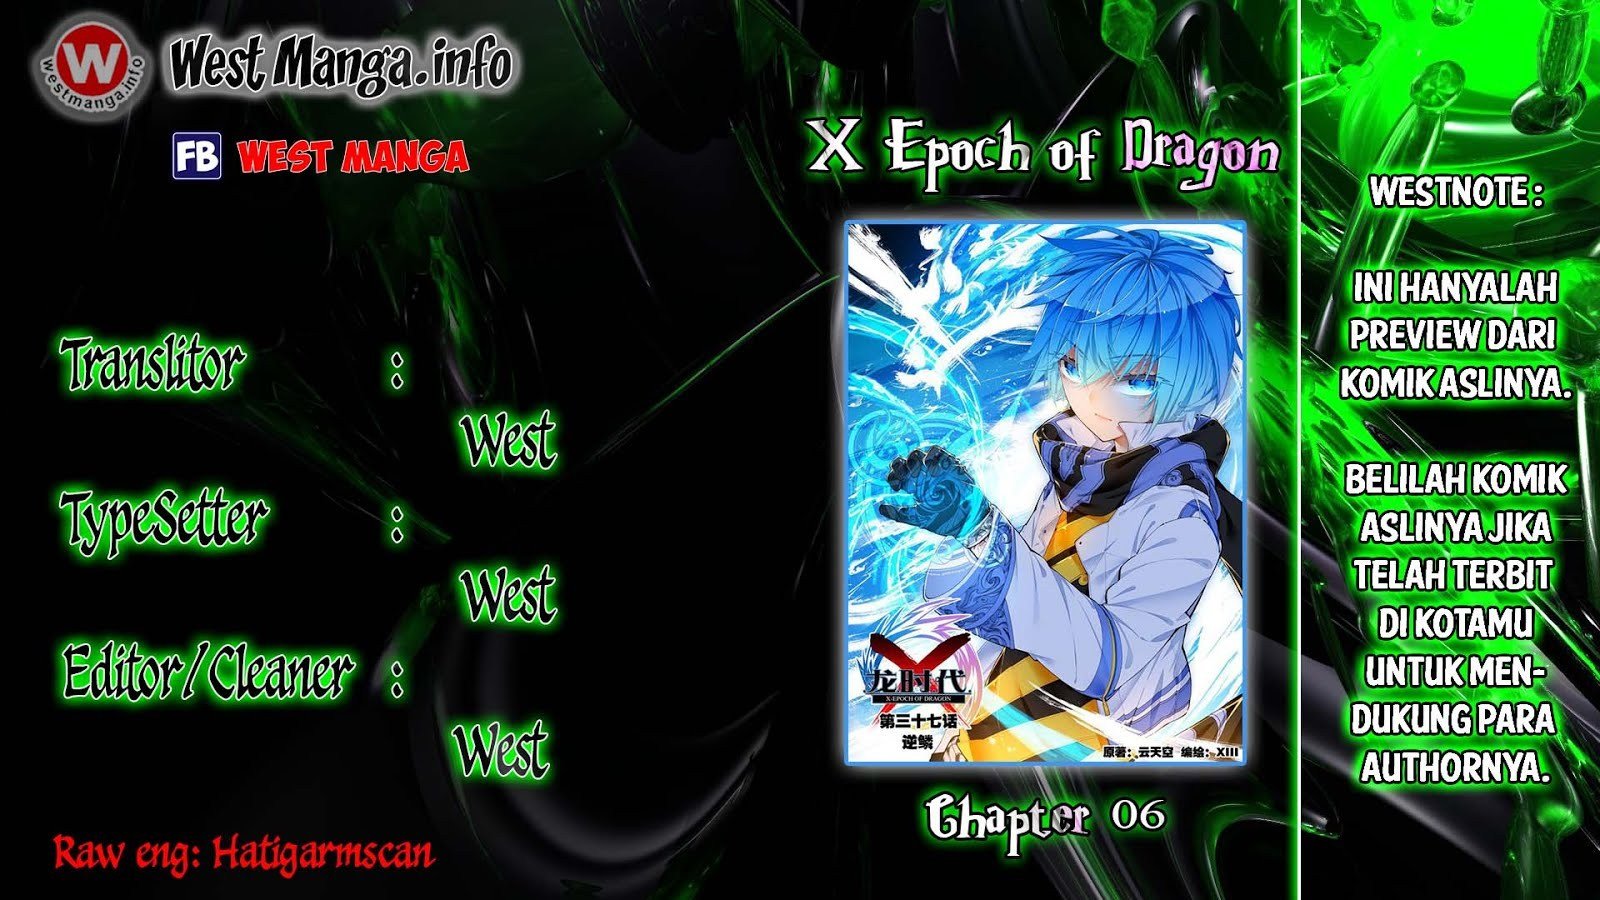 X Epoch of Dragon Chapter 06